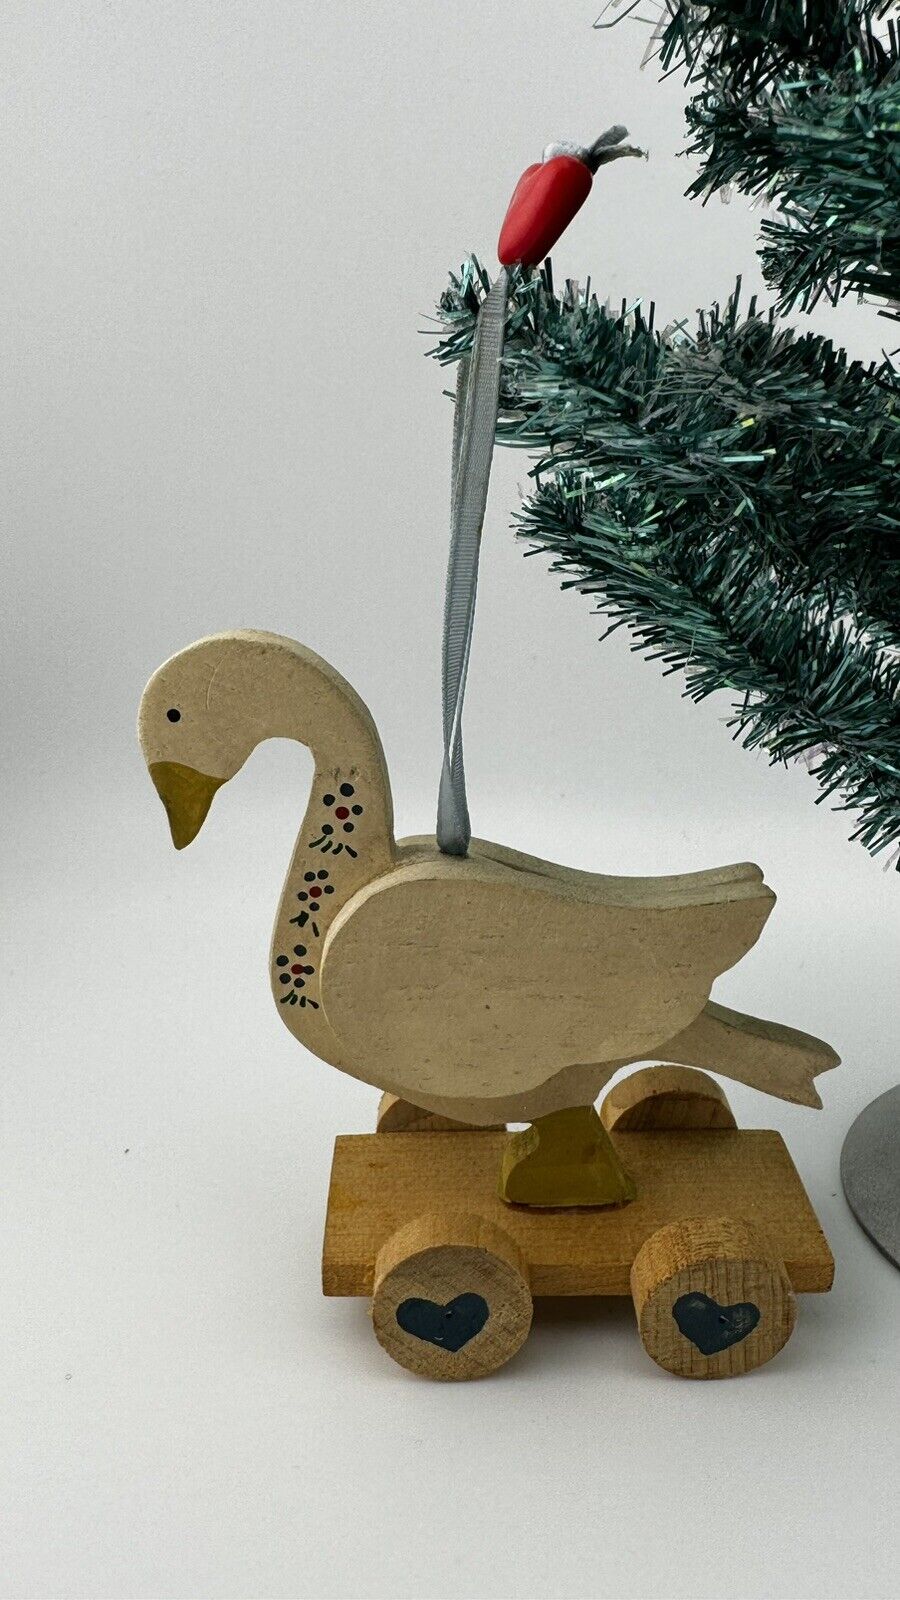 1988 Kurt S. Adler Handcrafted Wooden Duck Ornament on Wheels